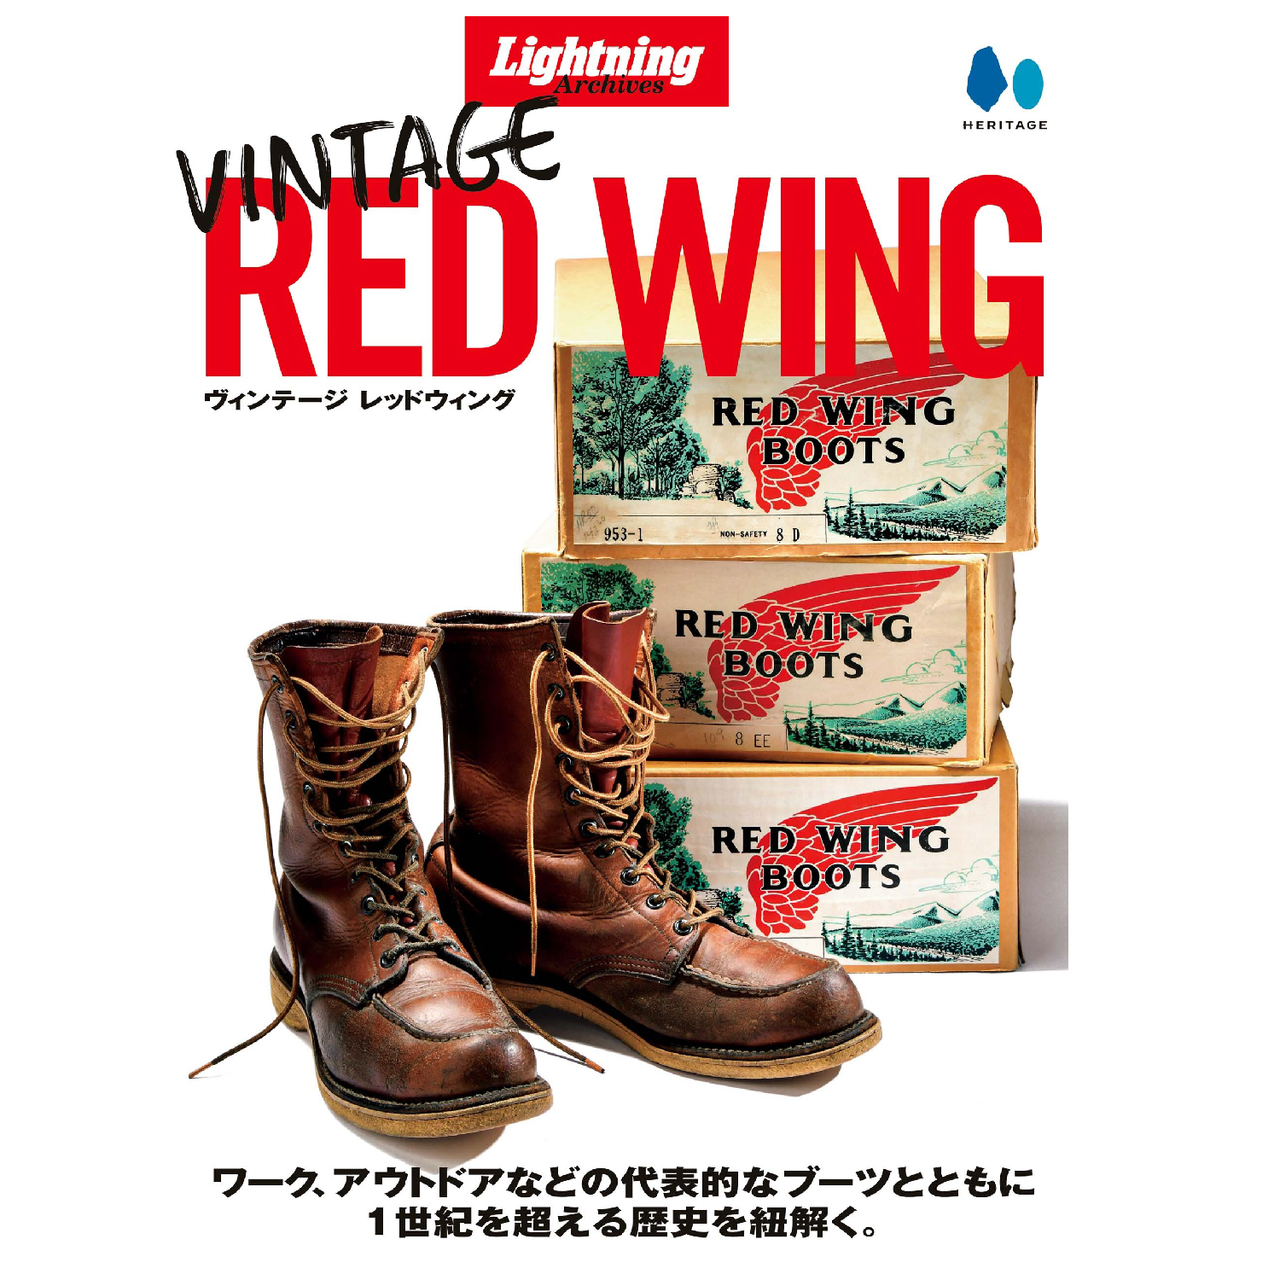 Lightning Archives "Vintage red wing"-Magazine-Clutch Cafe